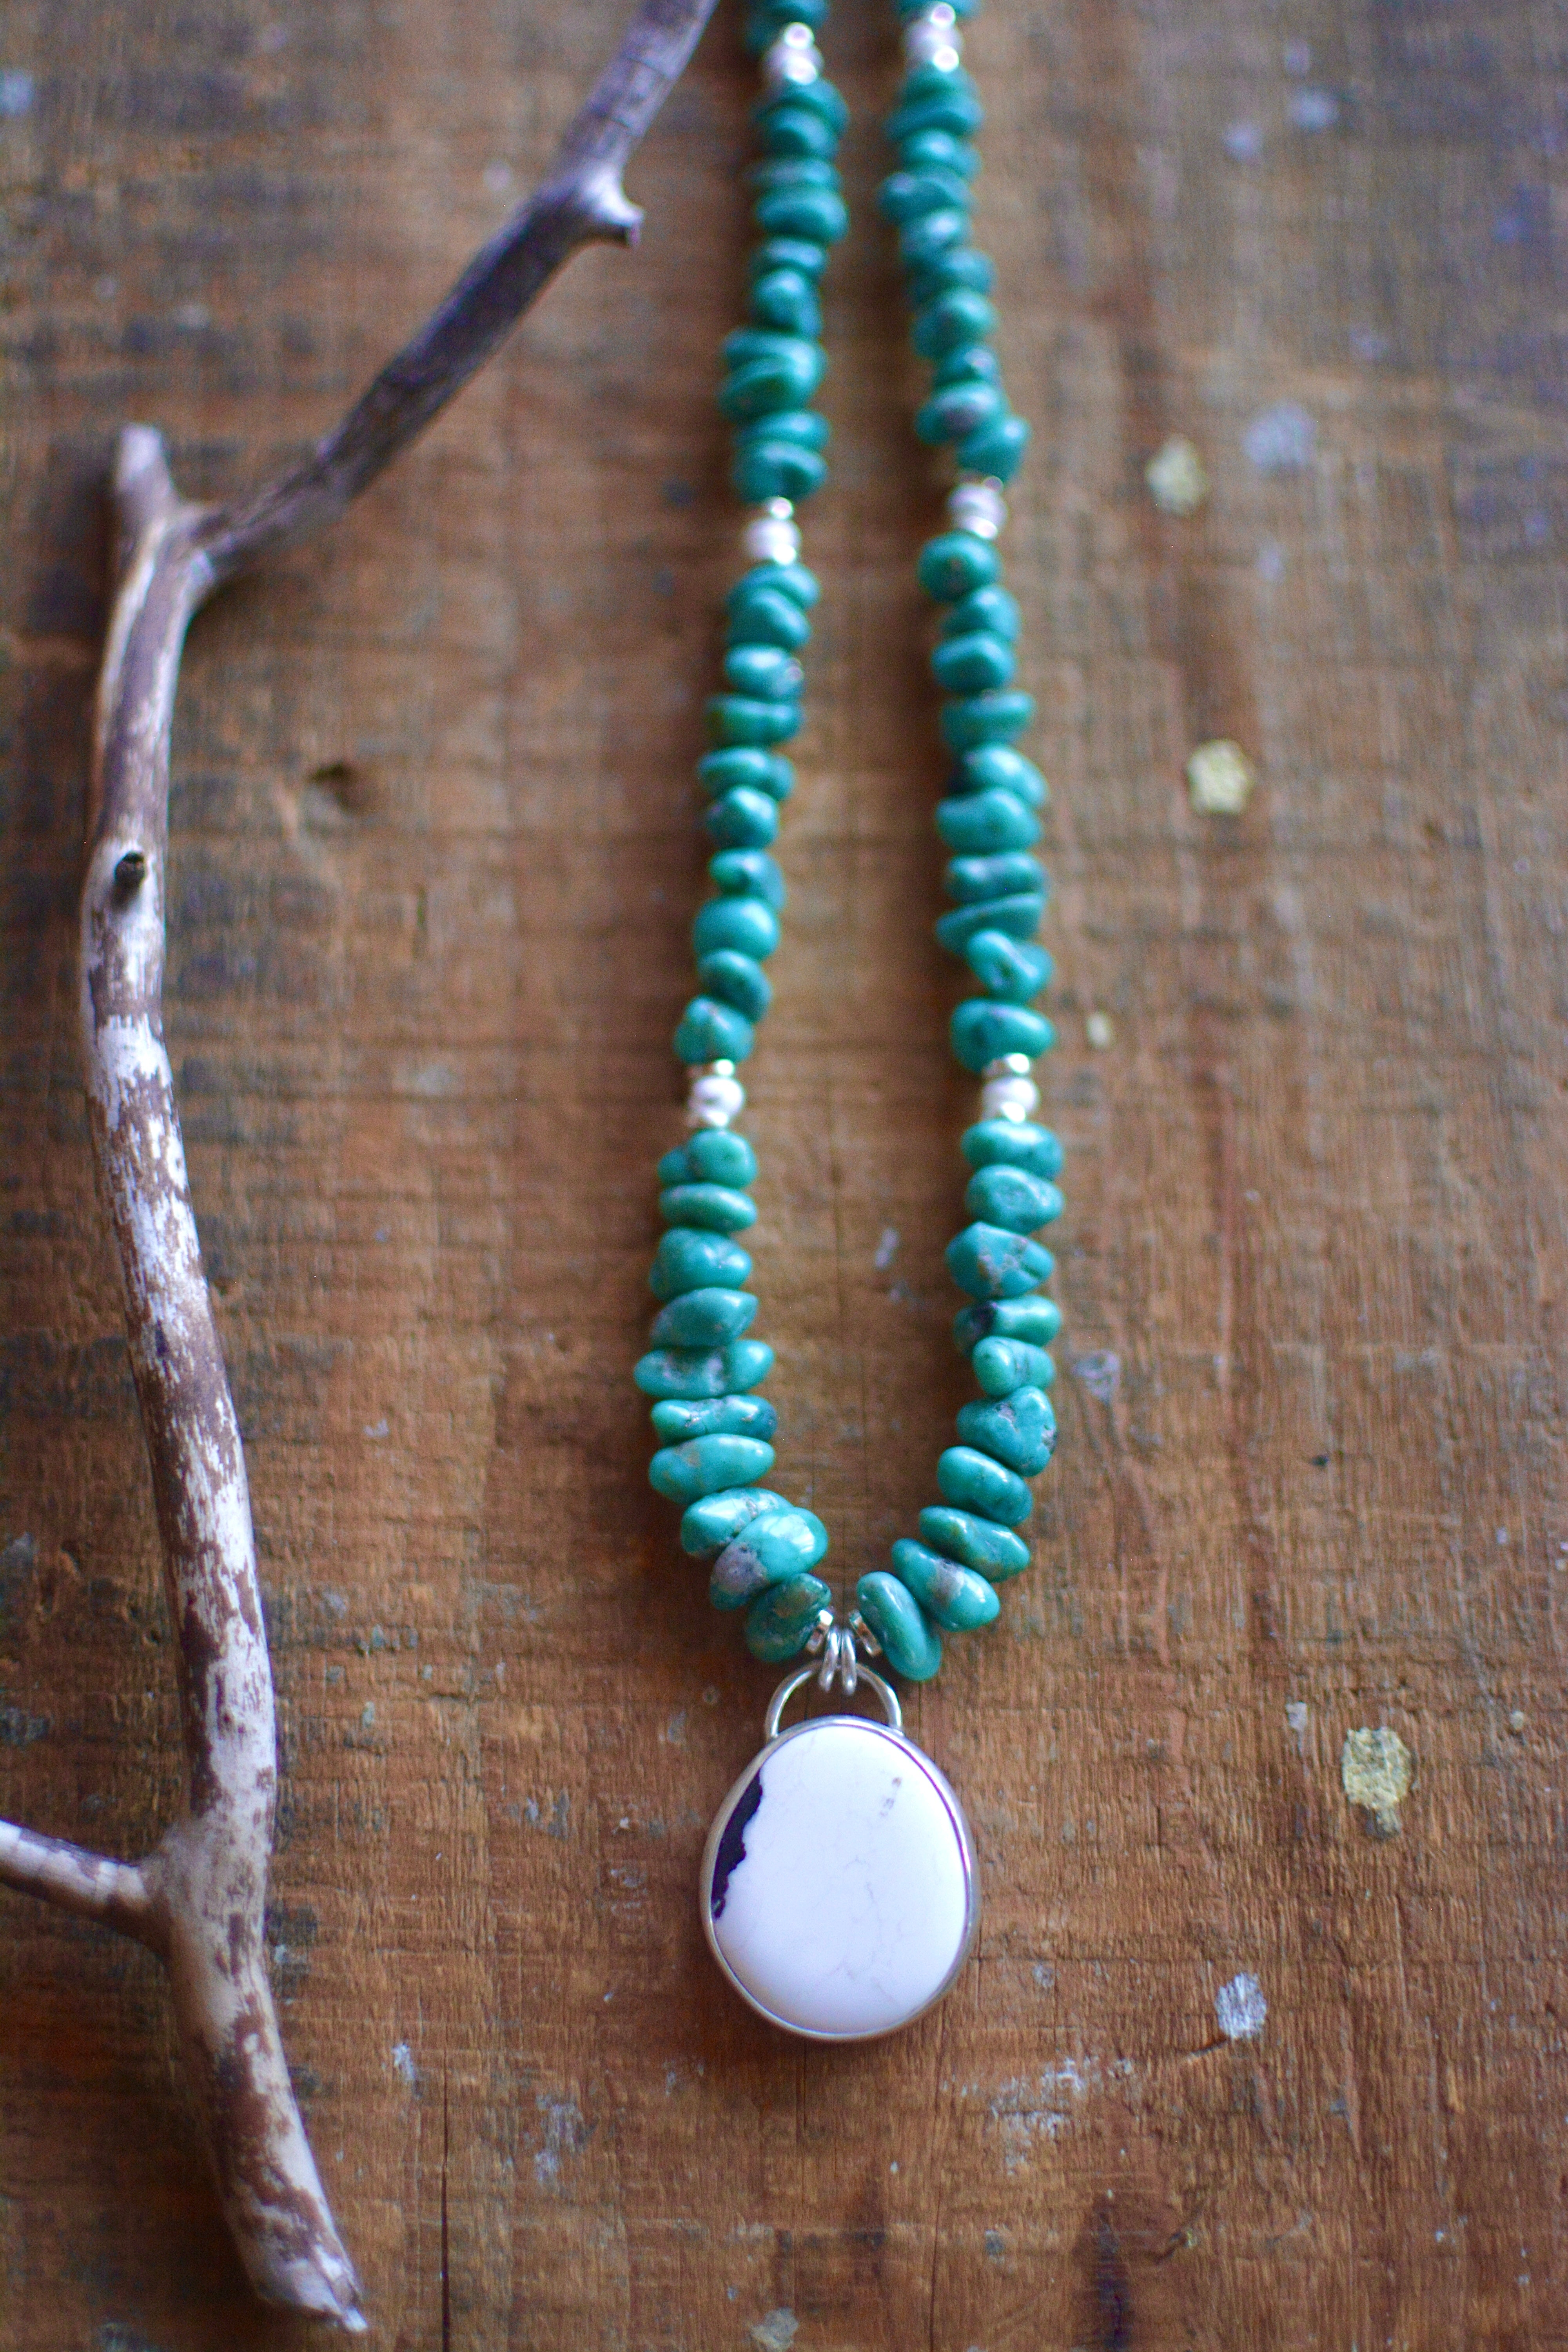 Campitos Turquoise Beaded Necklace with White Buffalo Turquoise Pendant